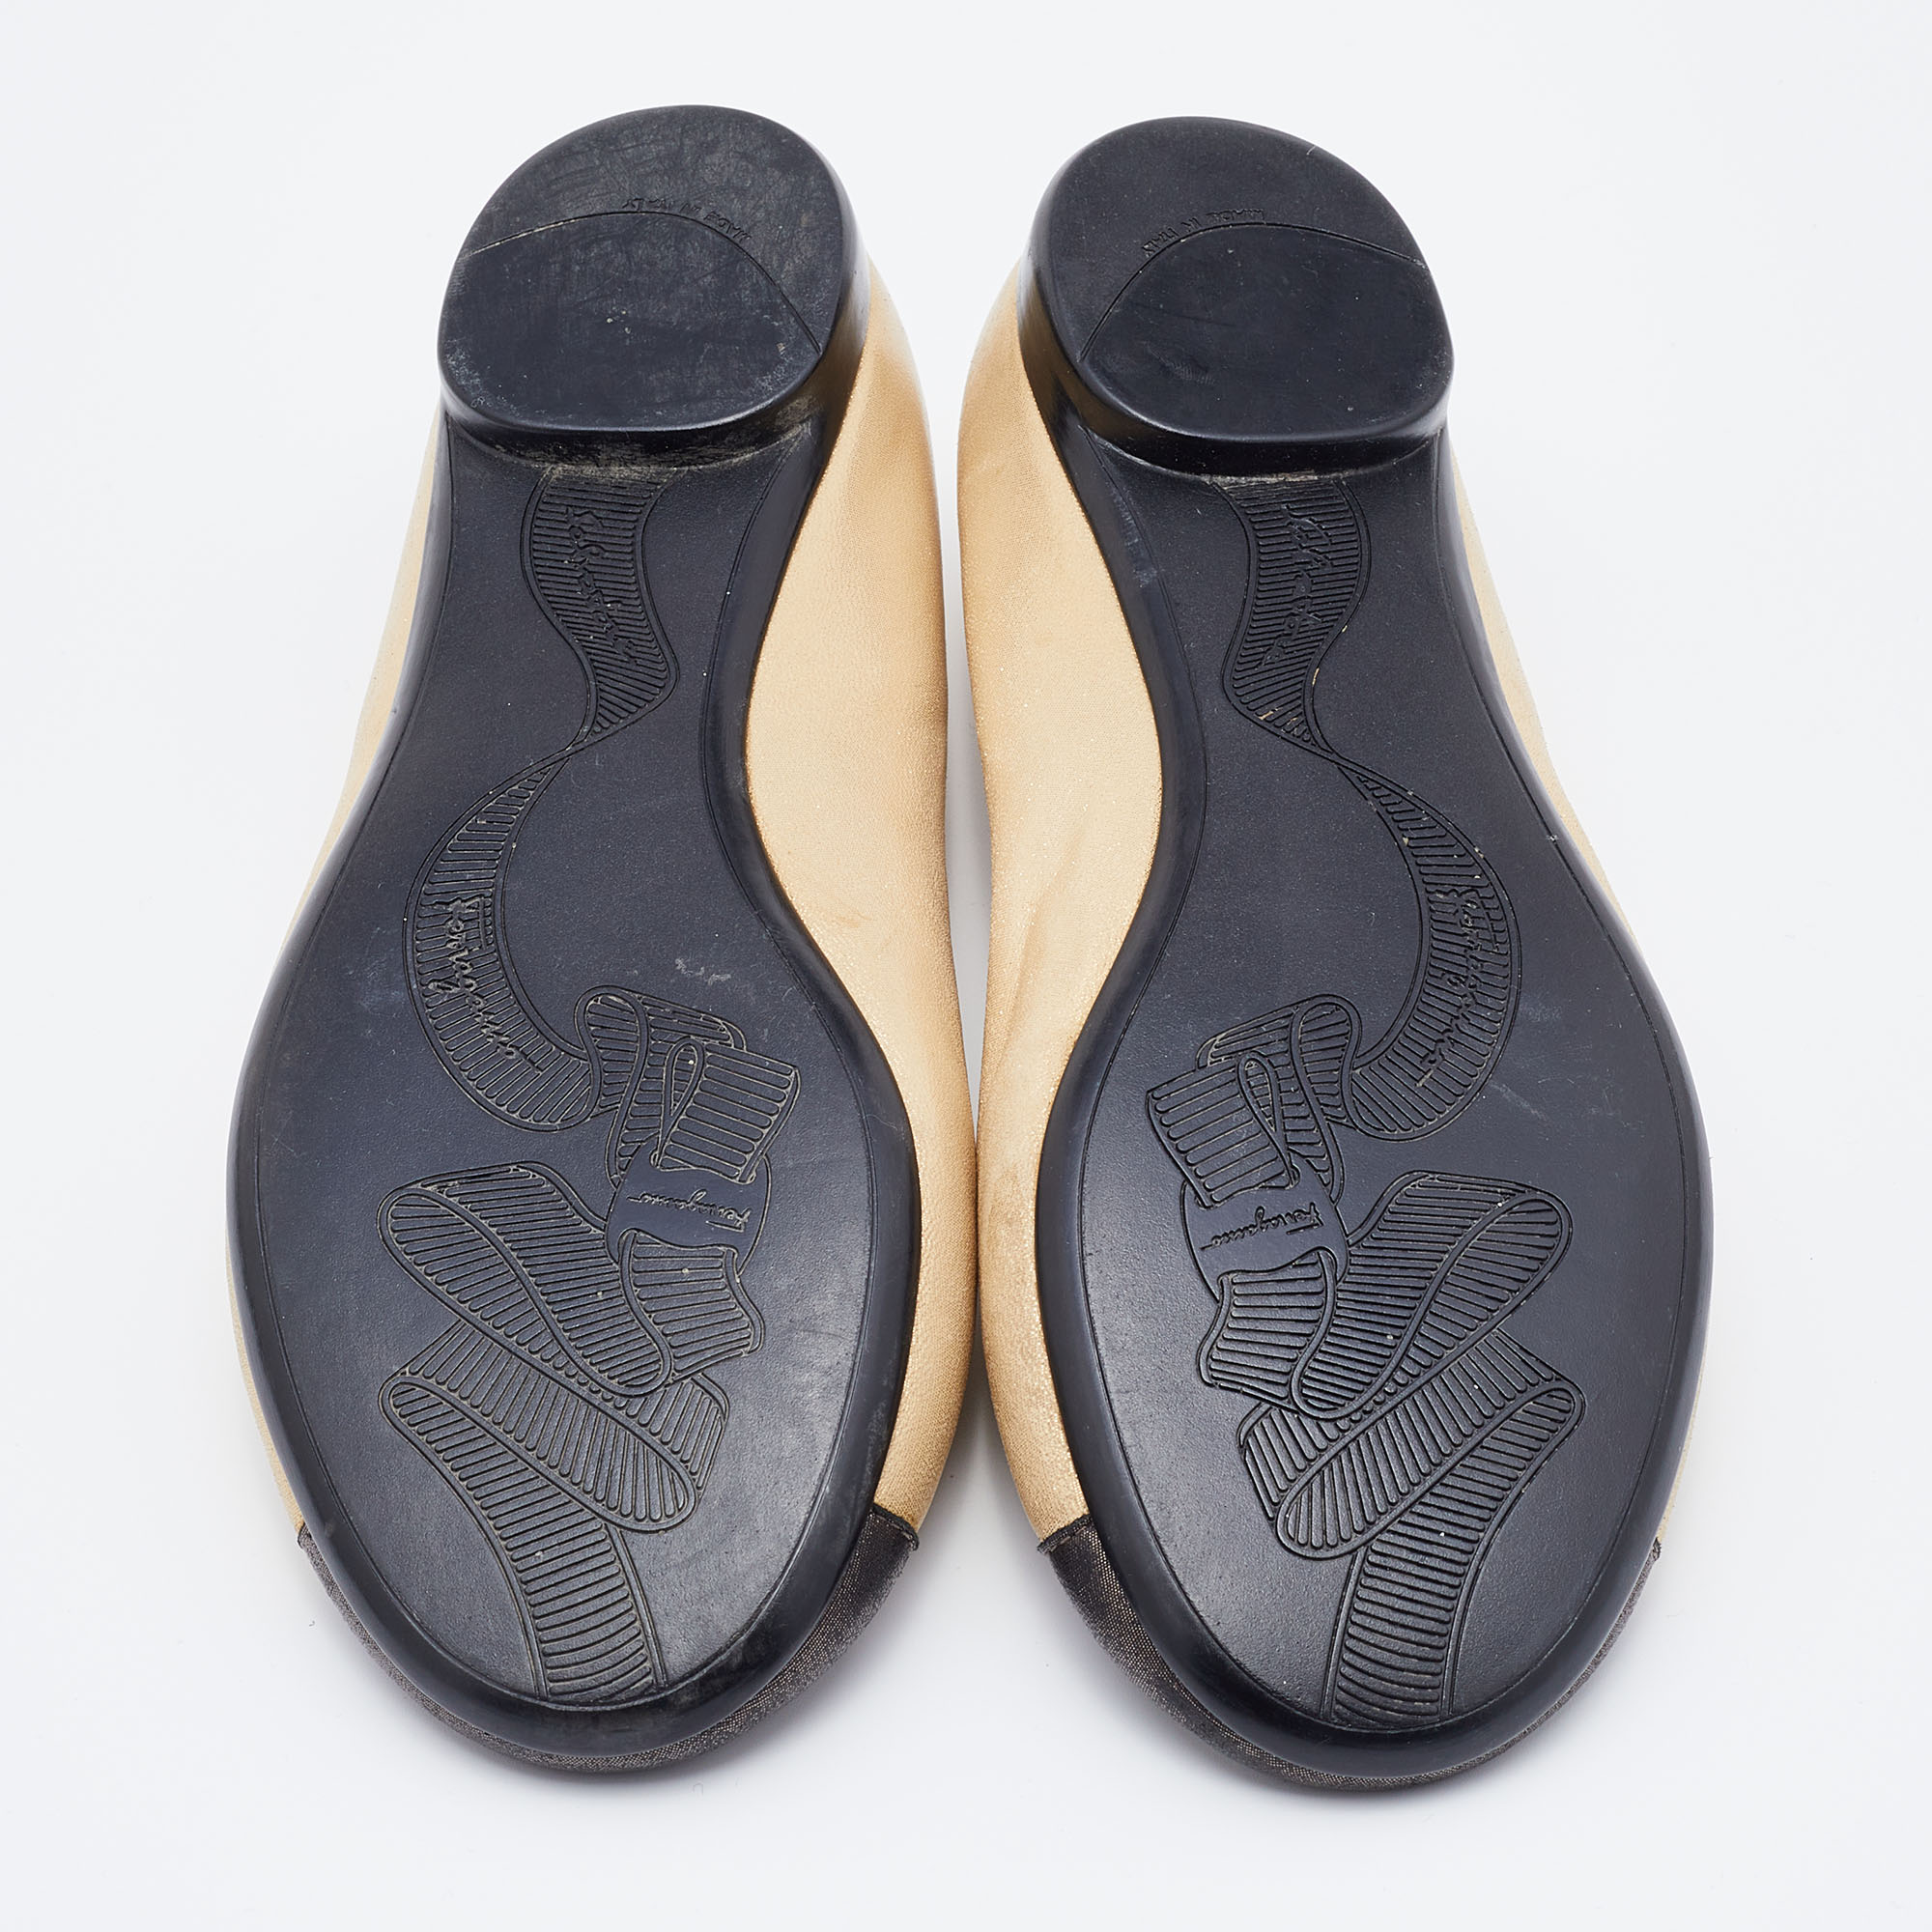 Salvatore Ferragamo Metallic Gold/Black Leather Cap Toe Metal Trim Ballet Flats Size 36